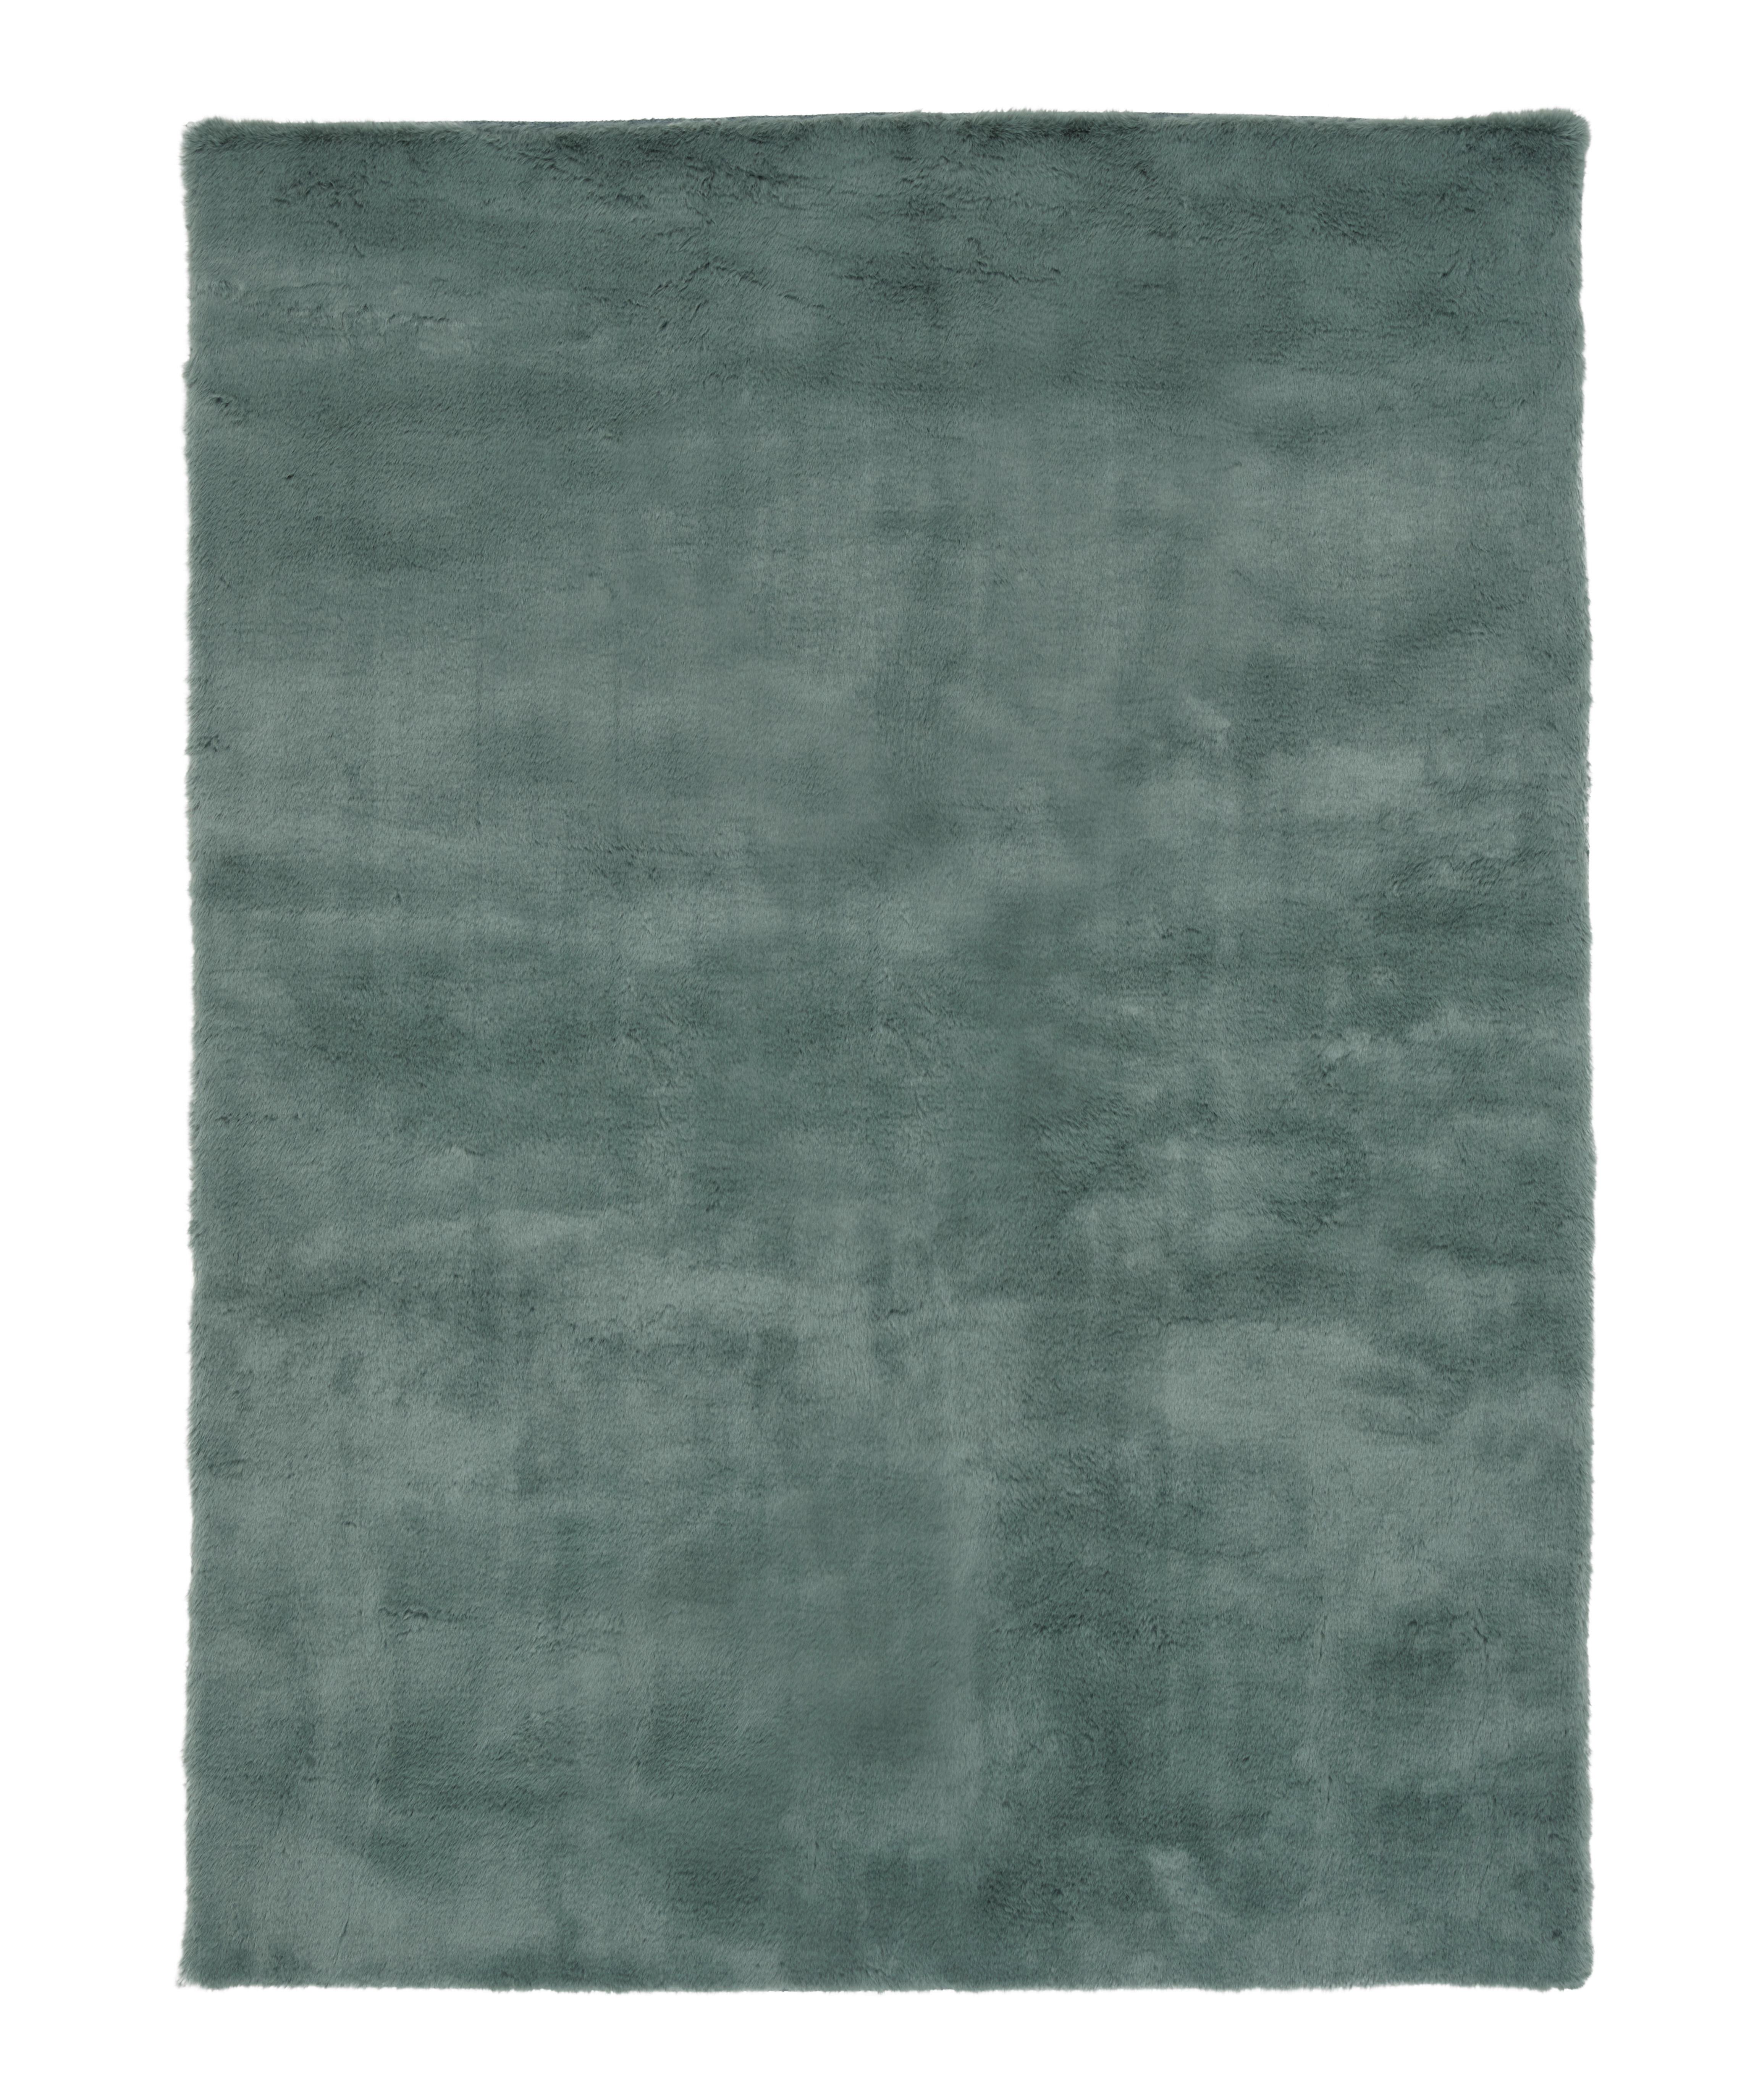 Umelá Kožušina Caroline, 80/150cm, Zelená - zelená, textil (80/150cm) - Modern Living